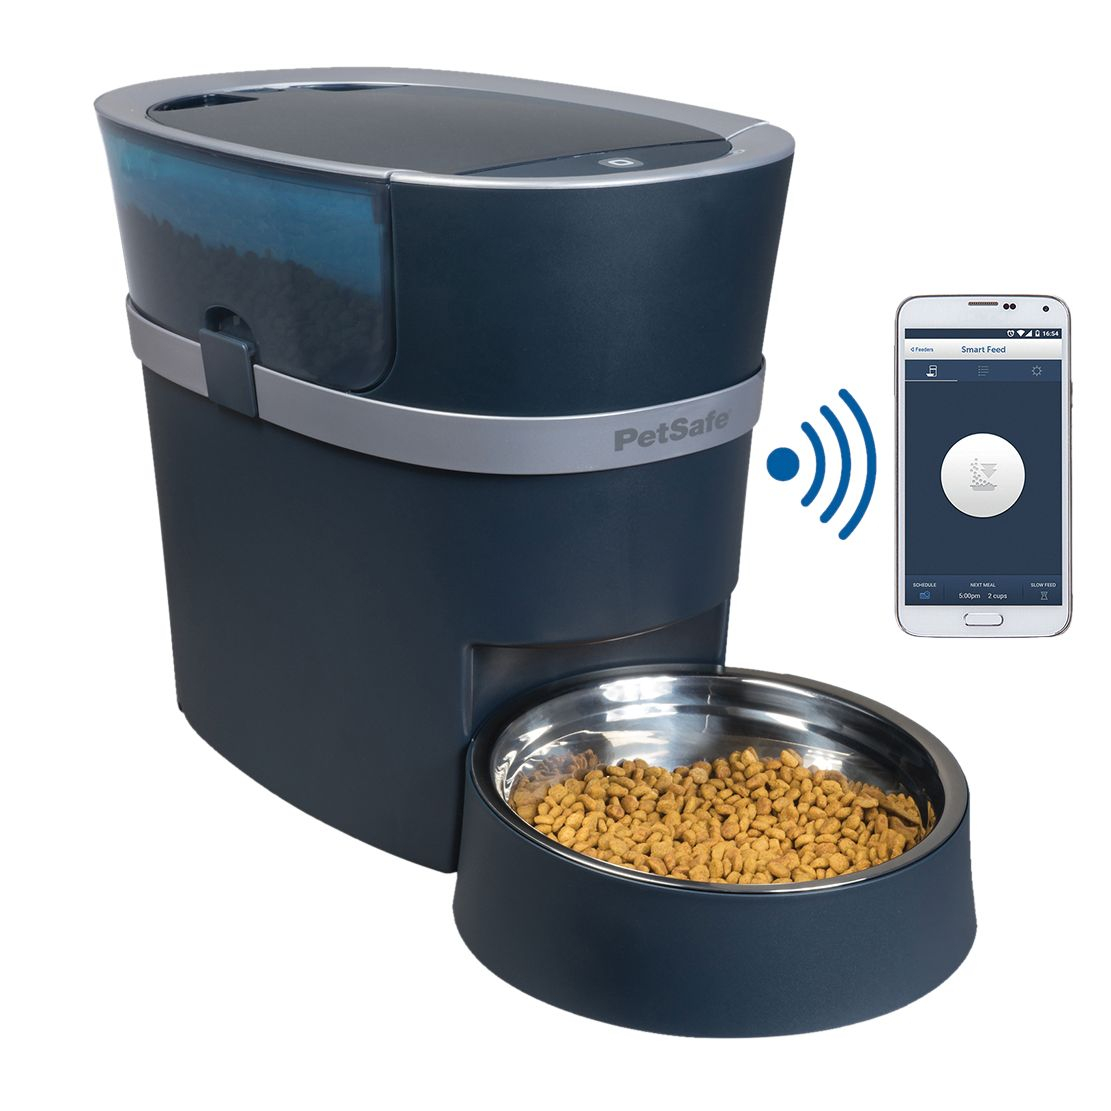 Hrănitor automat PetSafe Smart Feed 2.0